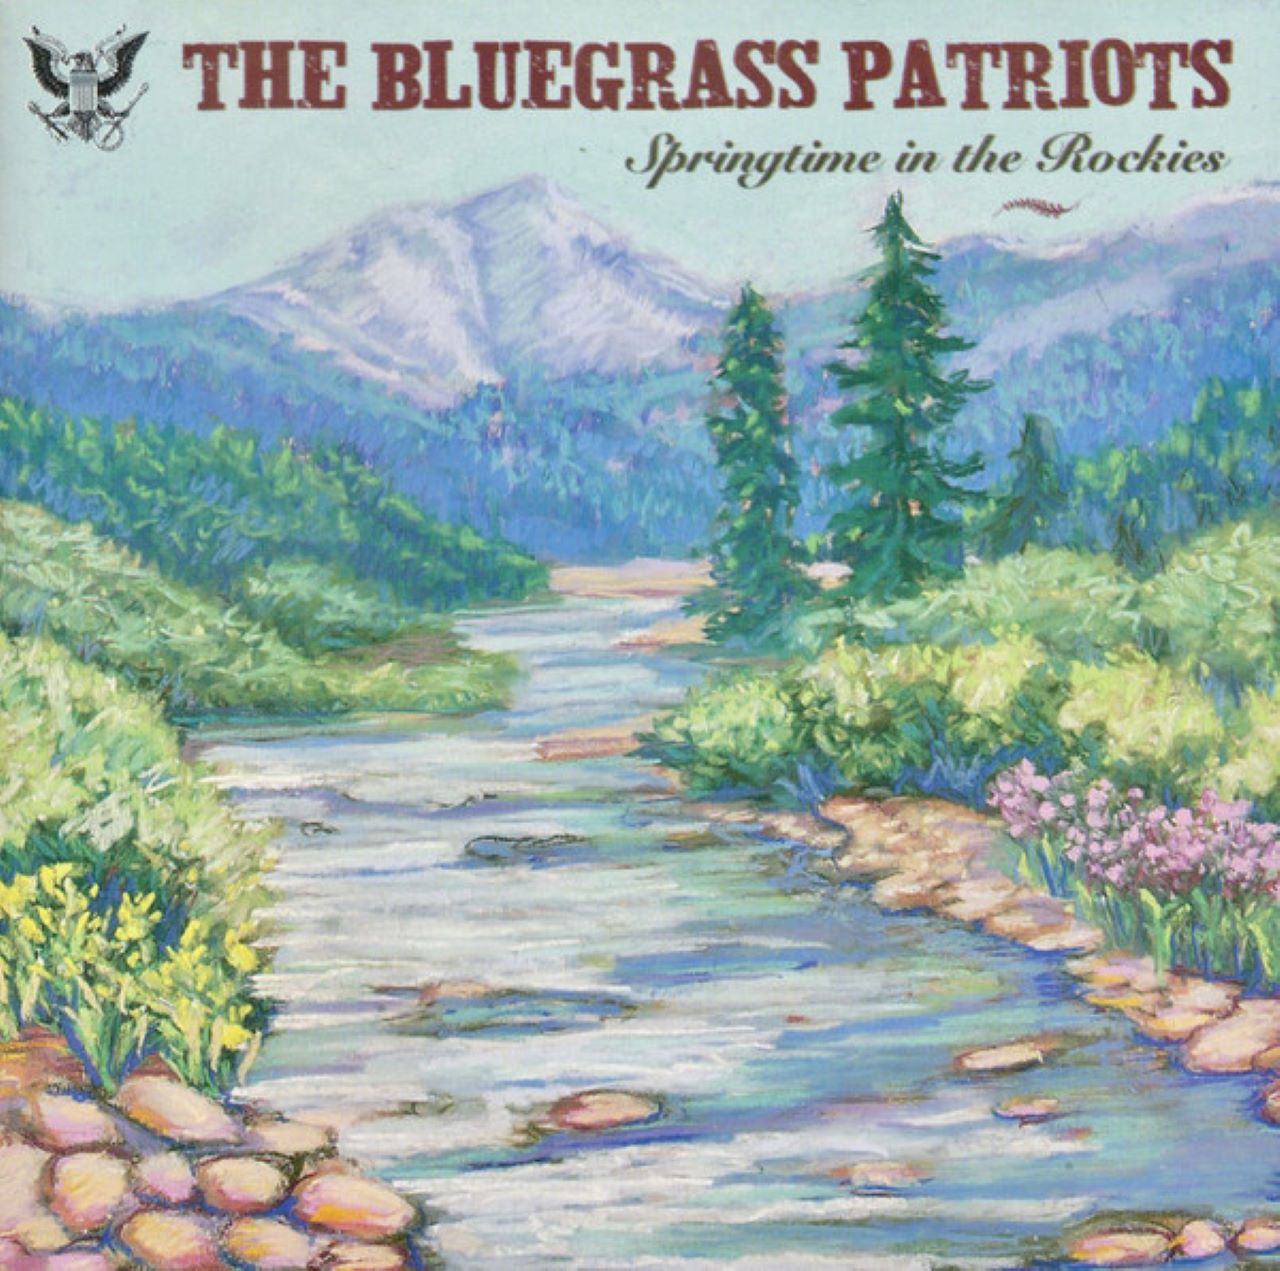 Bluegrass Patriots - Springtime In The Rockies cover album